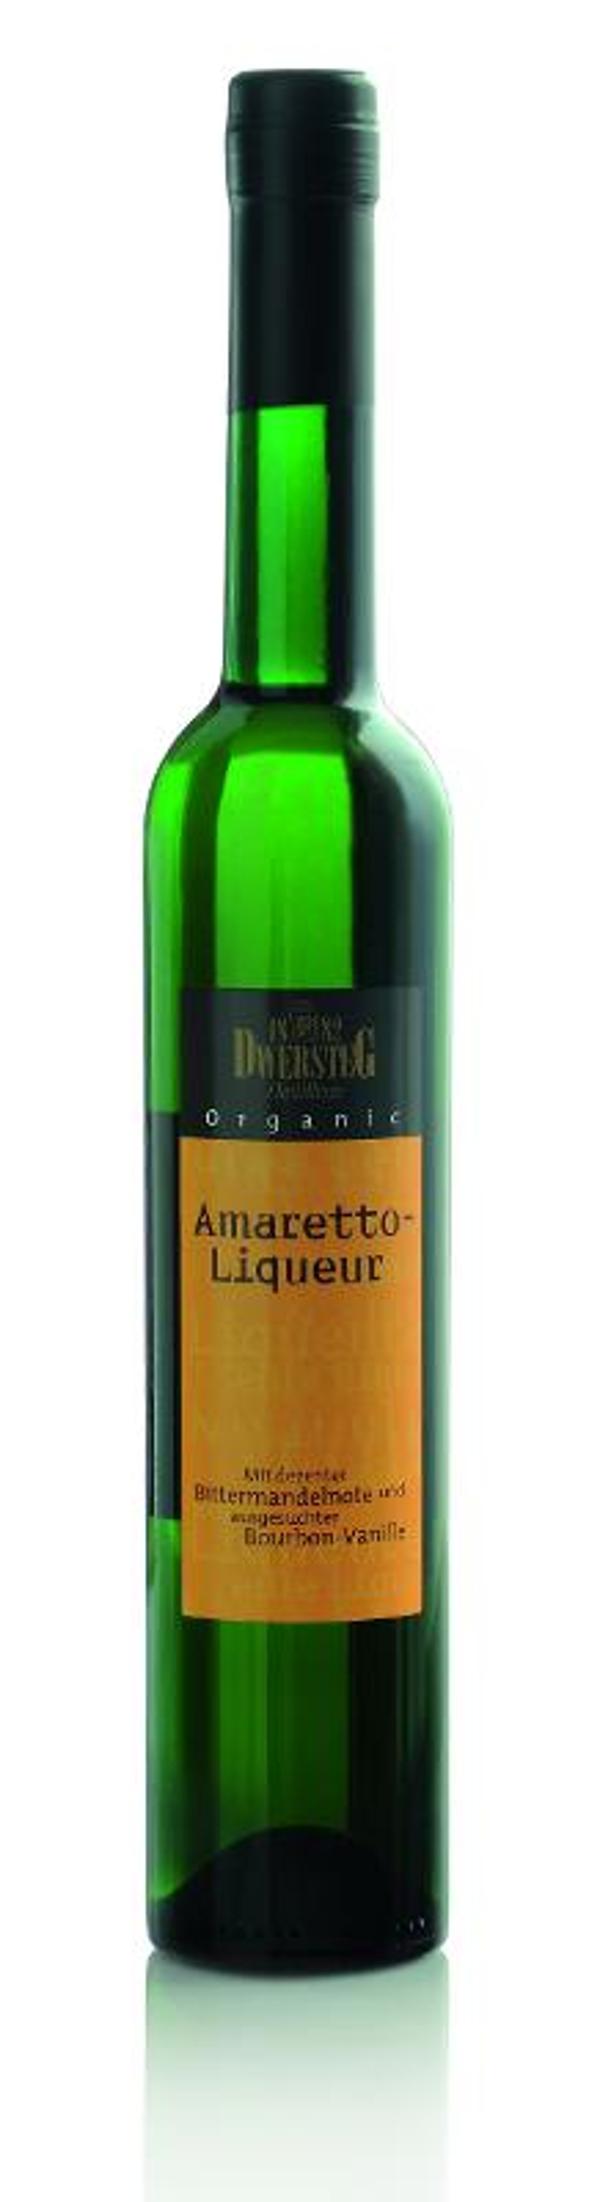 Produktfoto zu Amaretto-Liqueur, 0,5 l